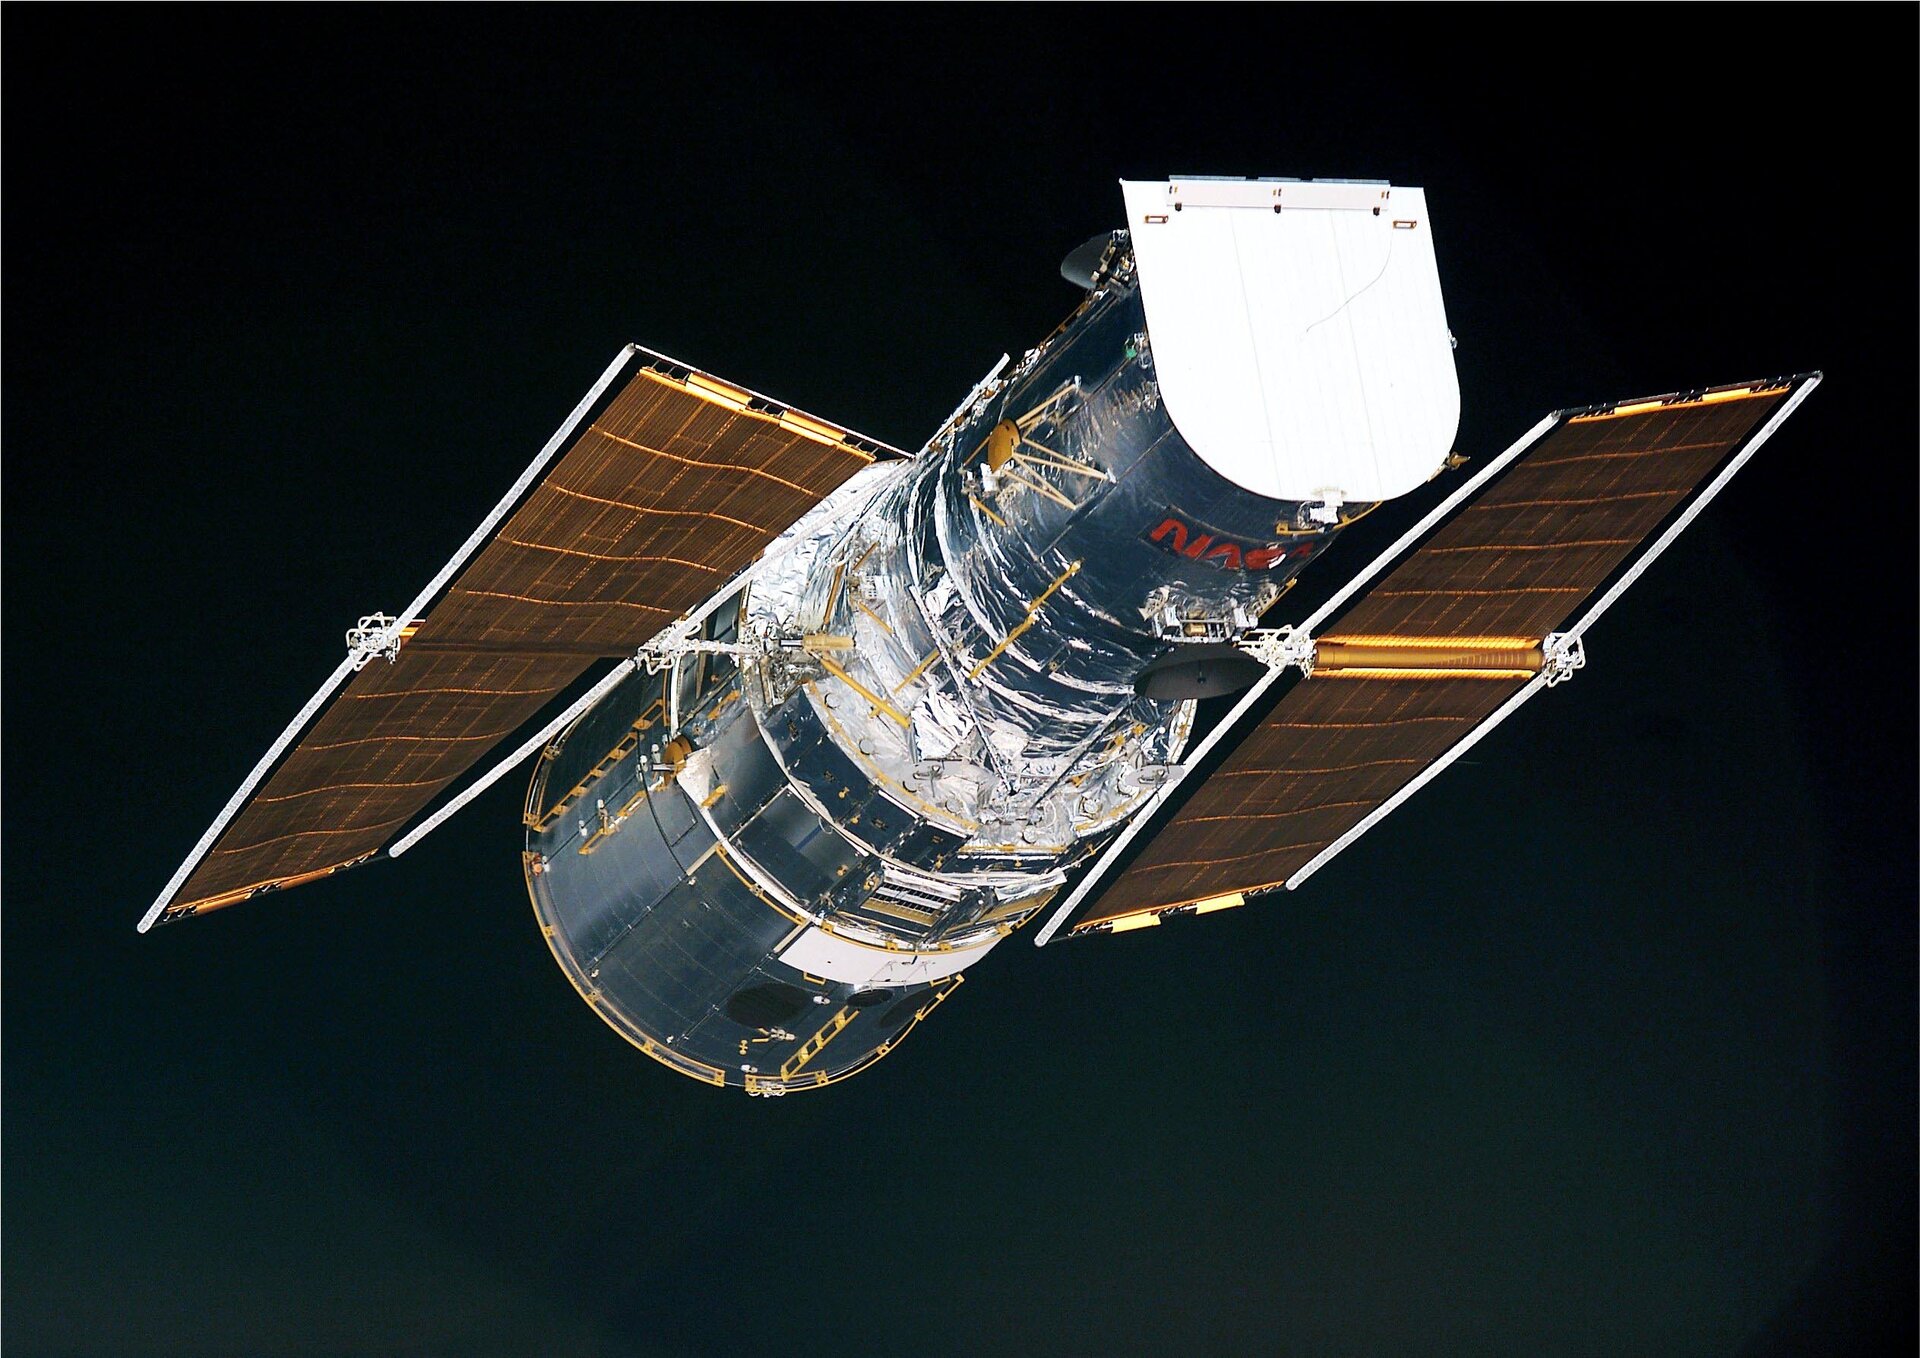 NASA/ESA Hubble Space Telescope in orbit